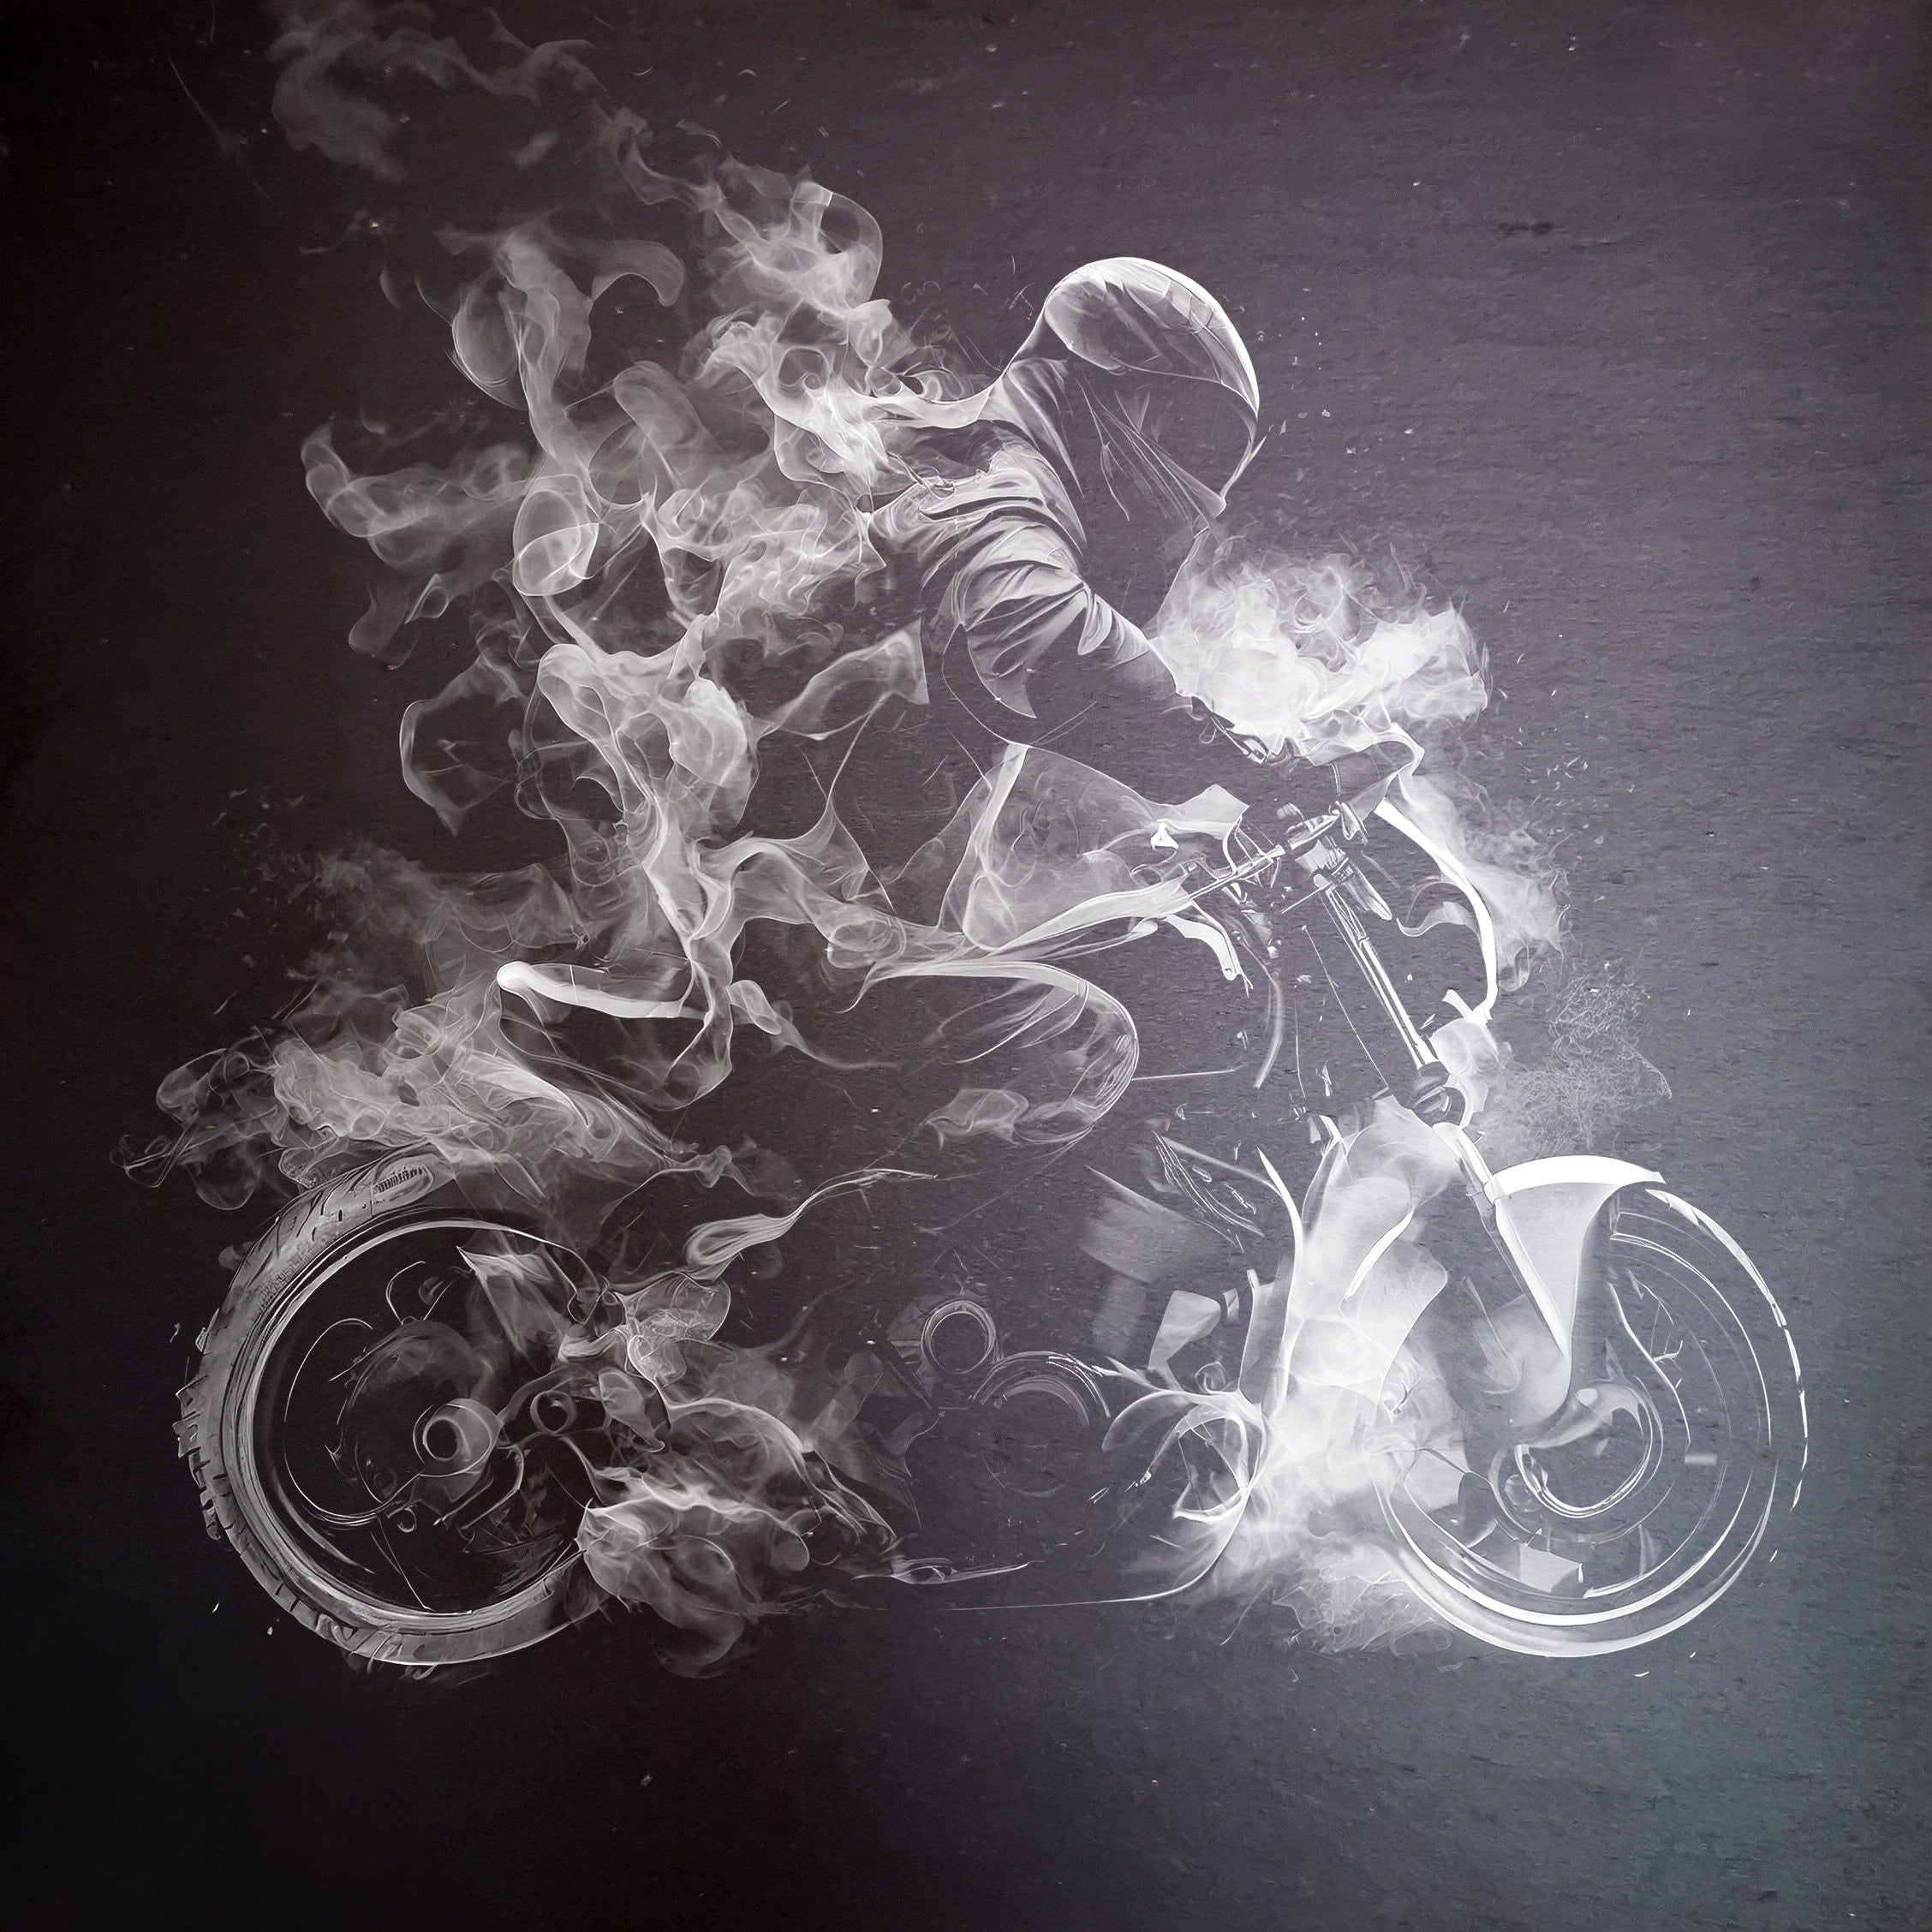 Slate - The Motorcyclist's Road in Smoke